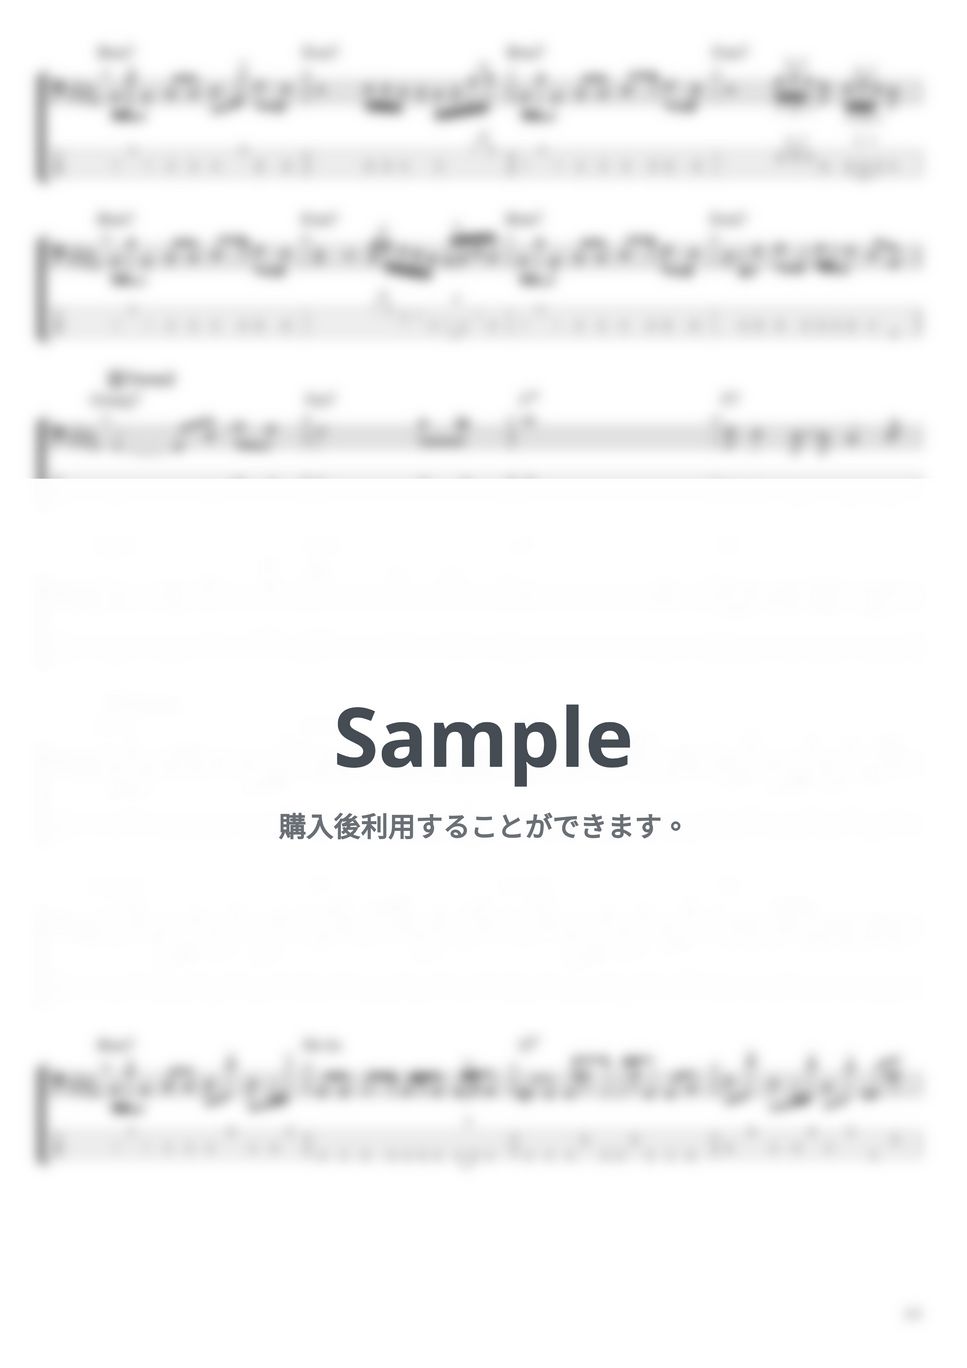 OKAMOTO'S - いつも、エンドレス (ベース Tab譜 4弦) by T's bass score